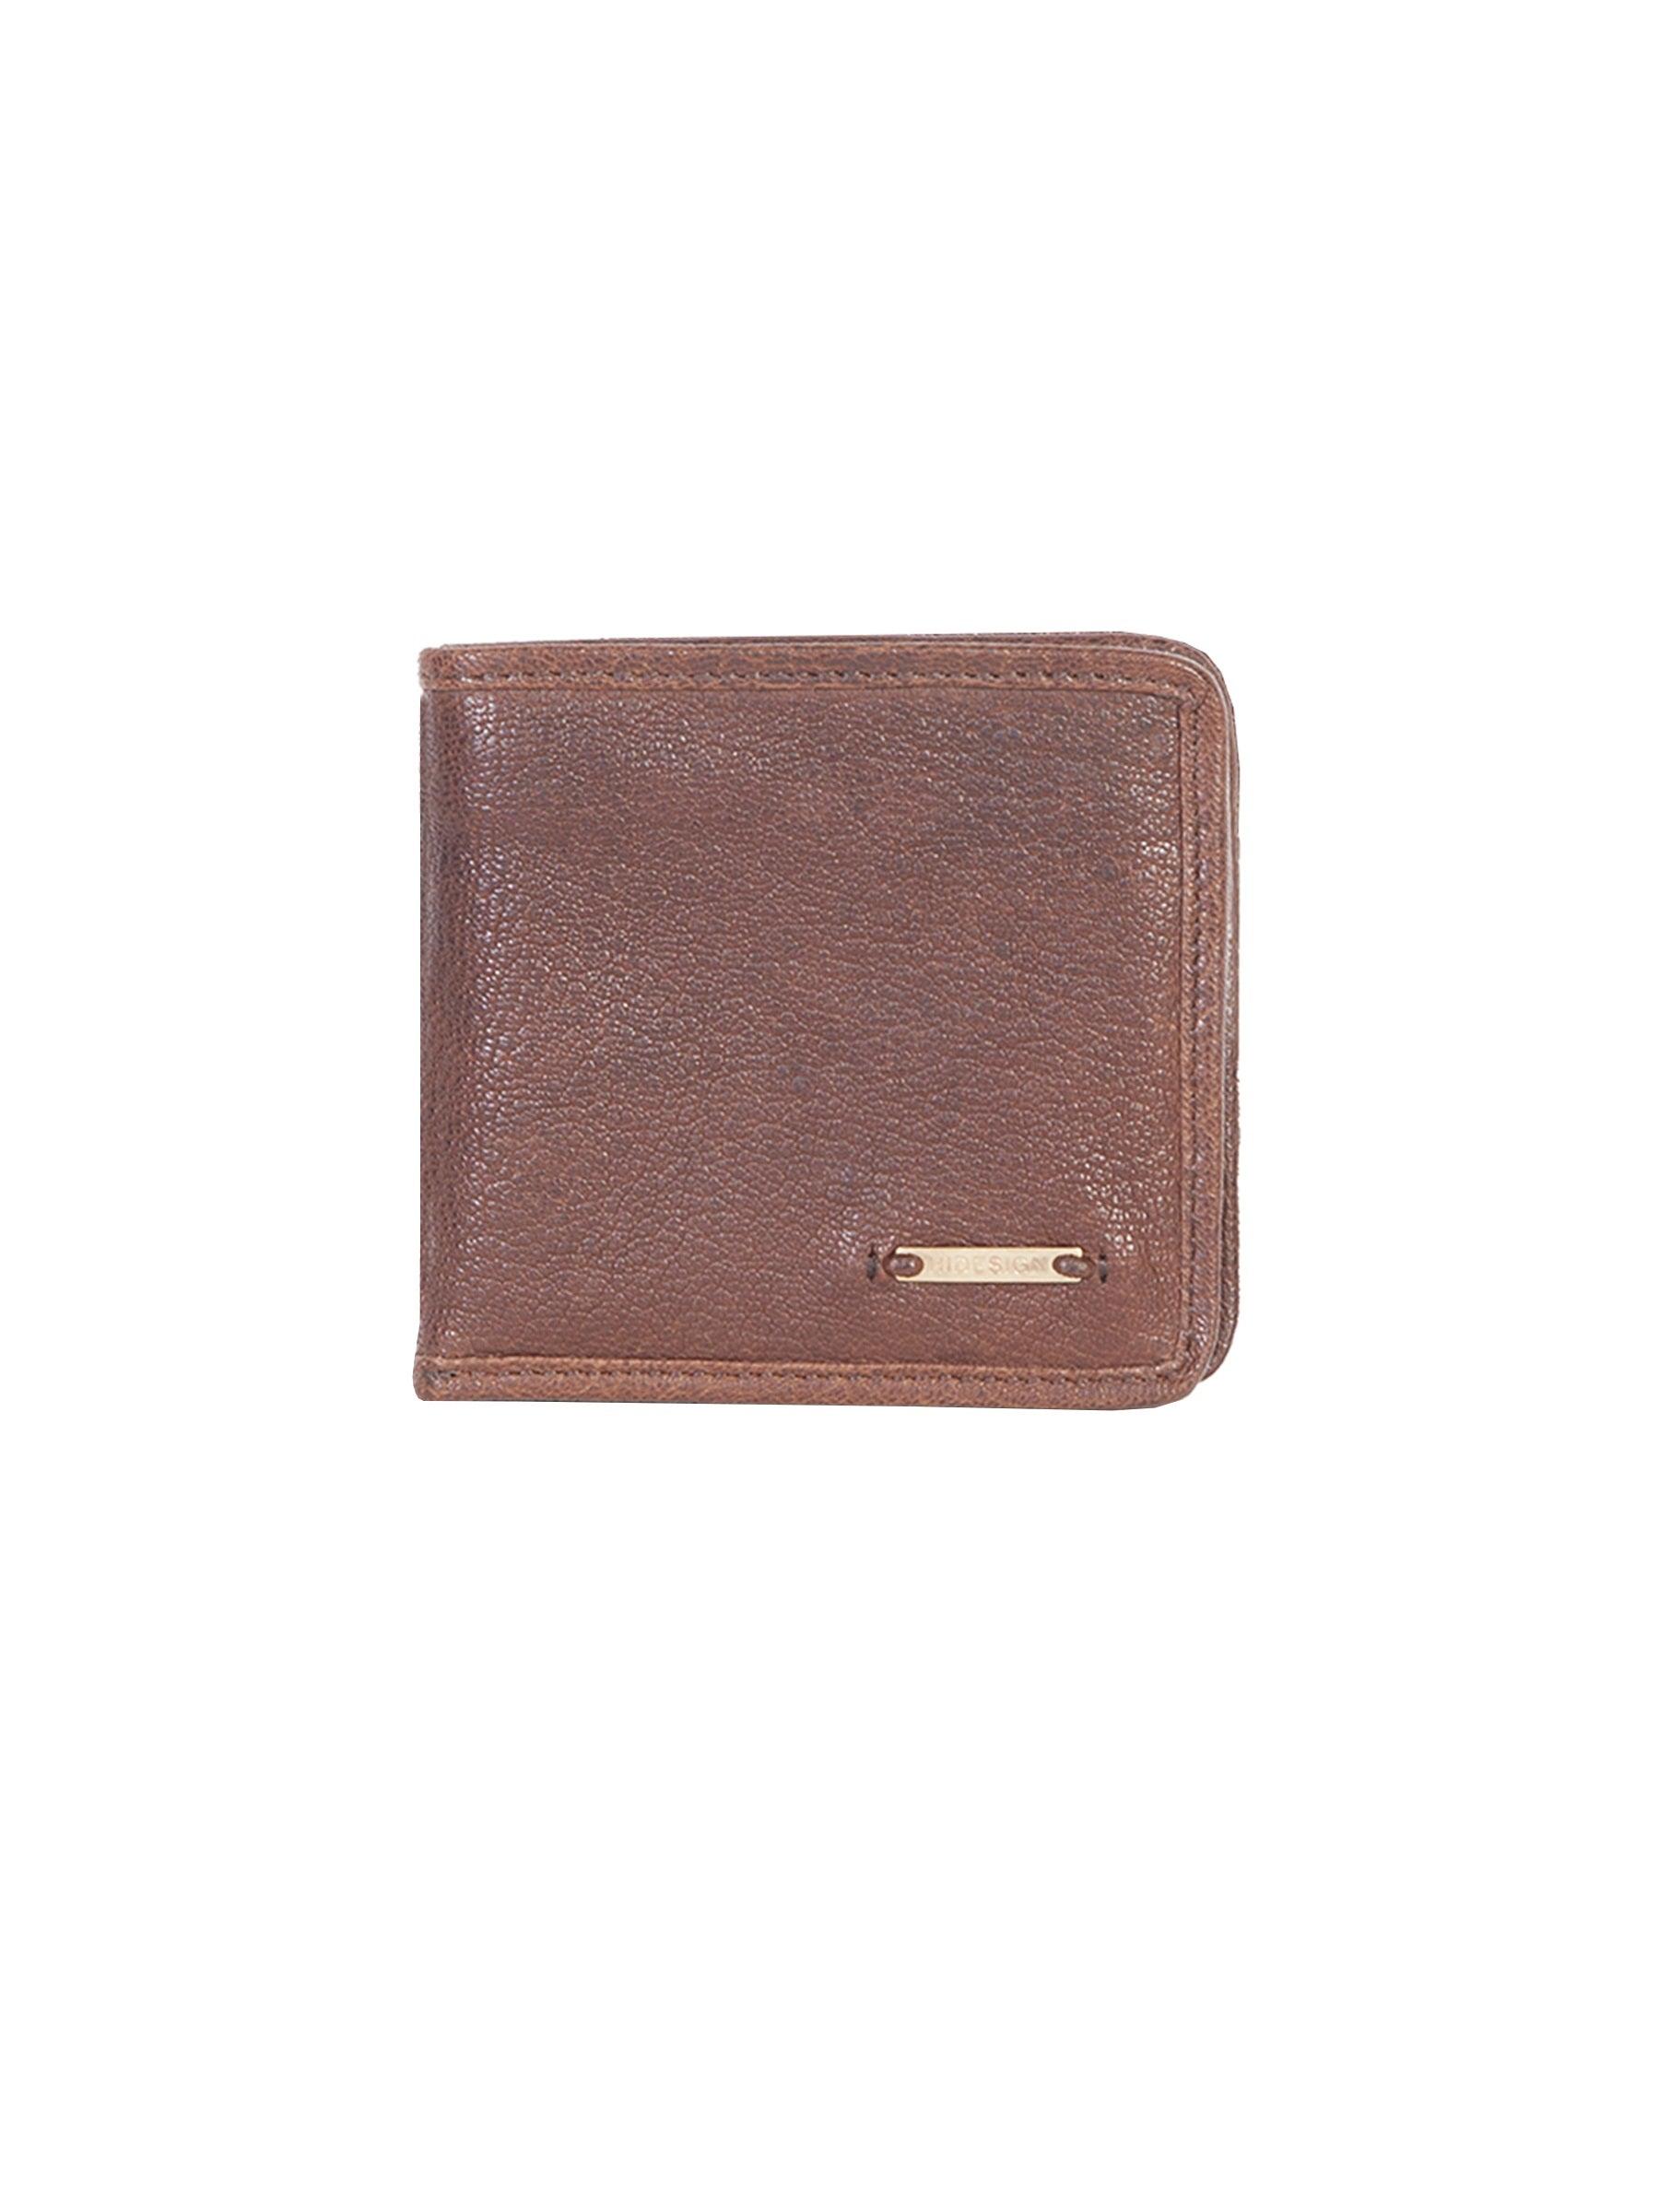 Scully Berkeley leather bi-fold wallet - Flyclothing LLC